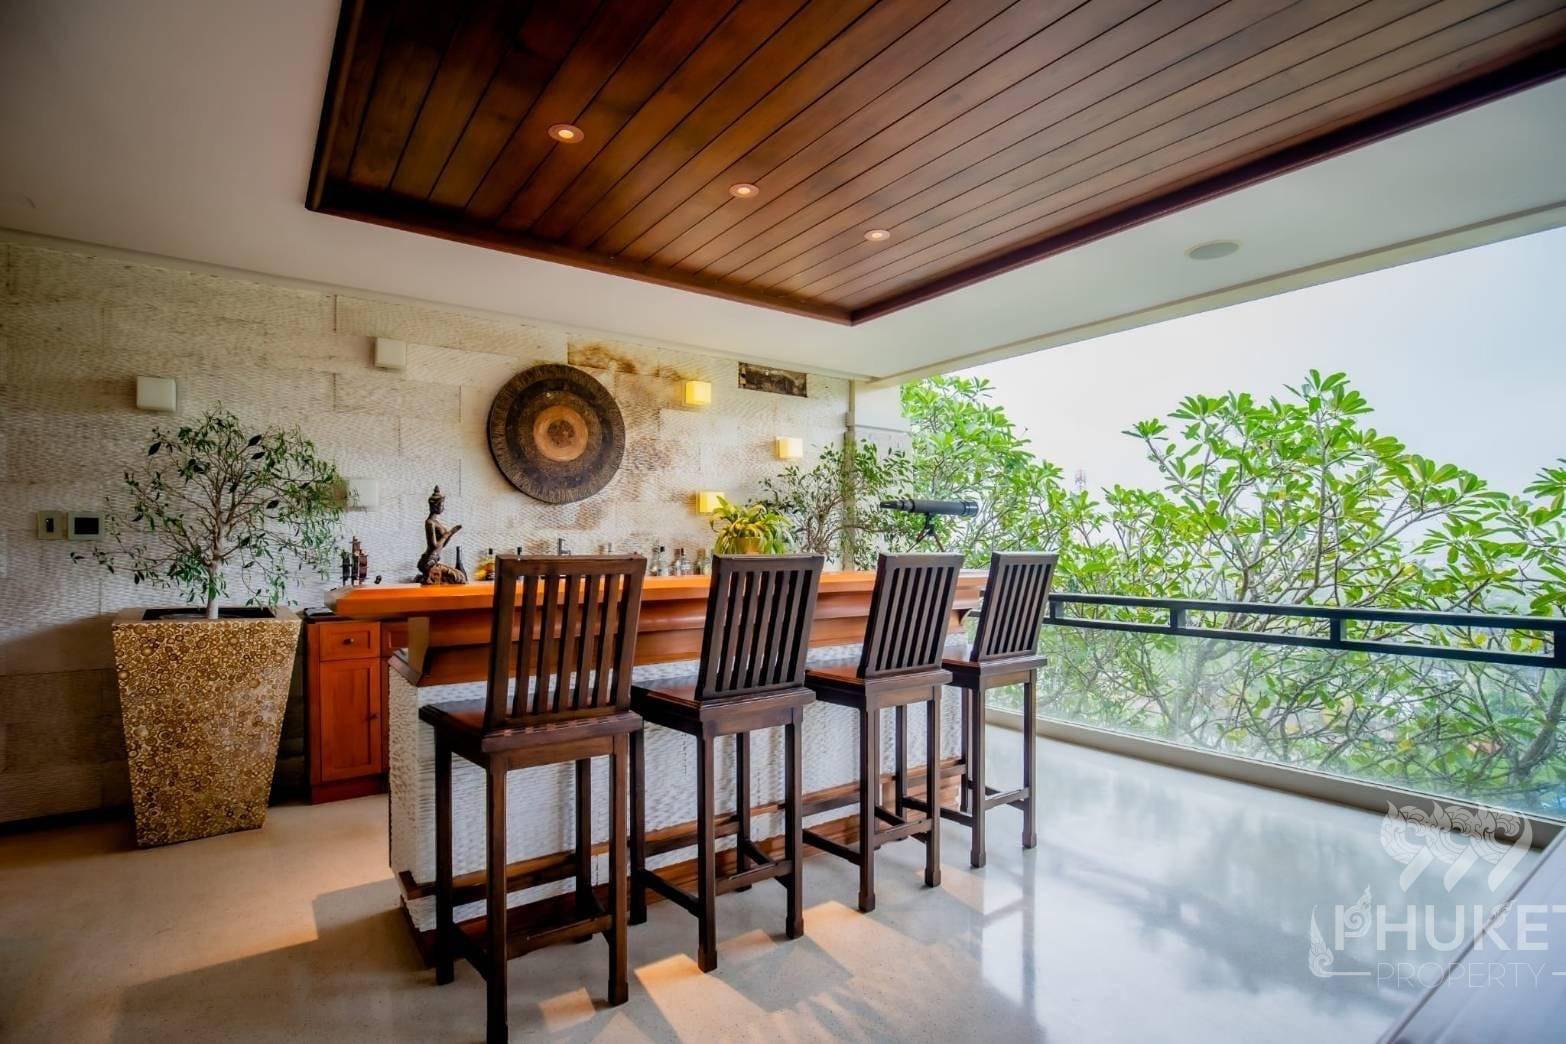 Luxurious Sea View Villa with own Helipad in Rawaii | 999PhuketProperty